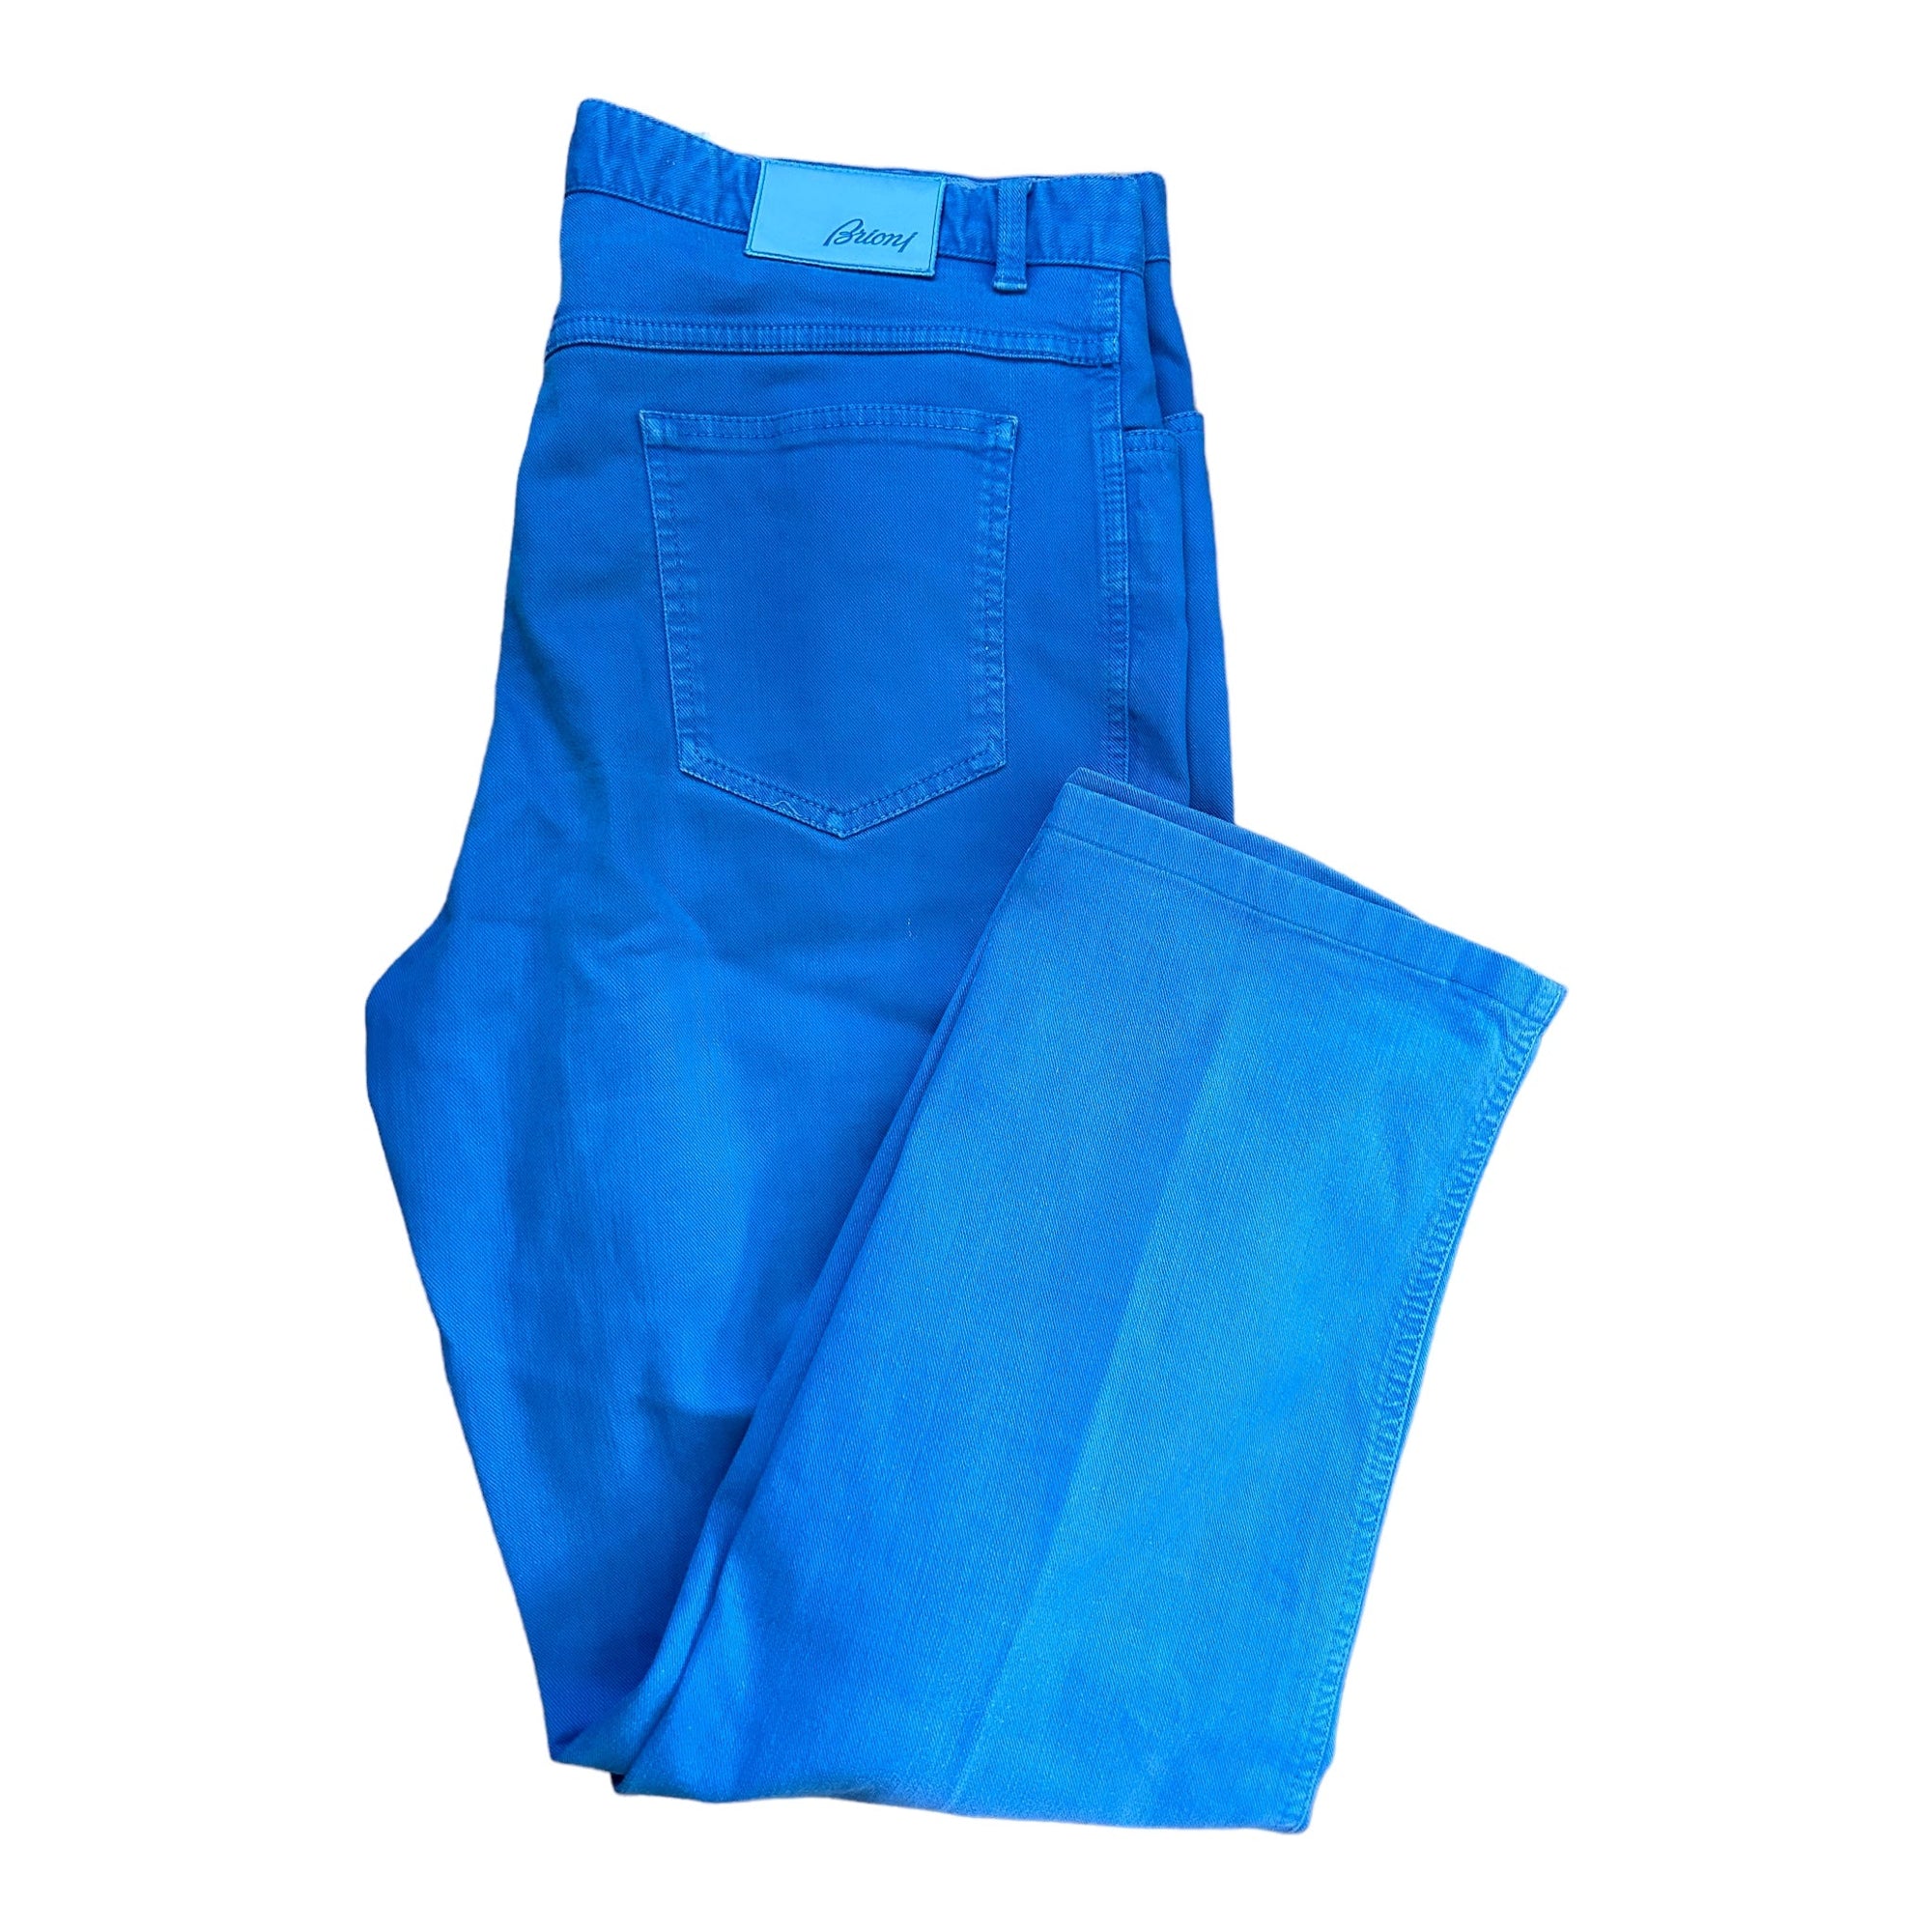 Brioni Hose blau - 24/7 Clothing